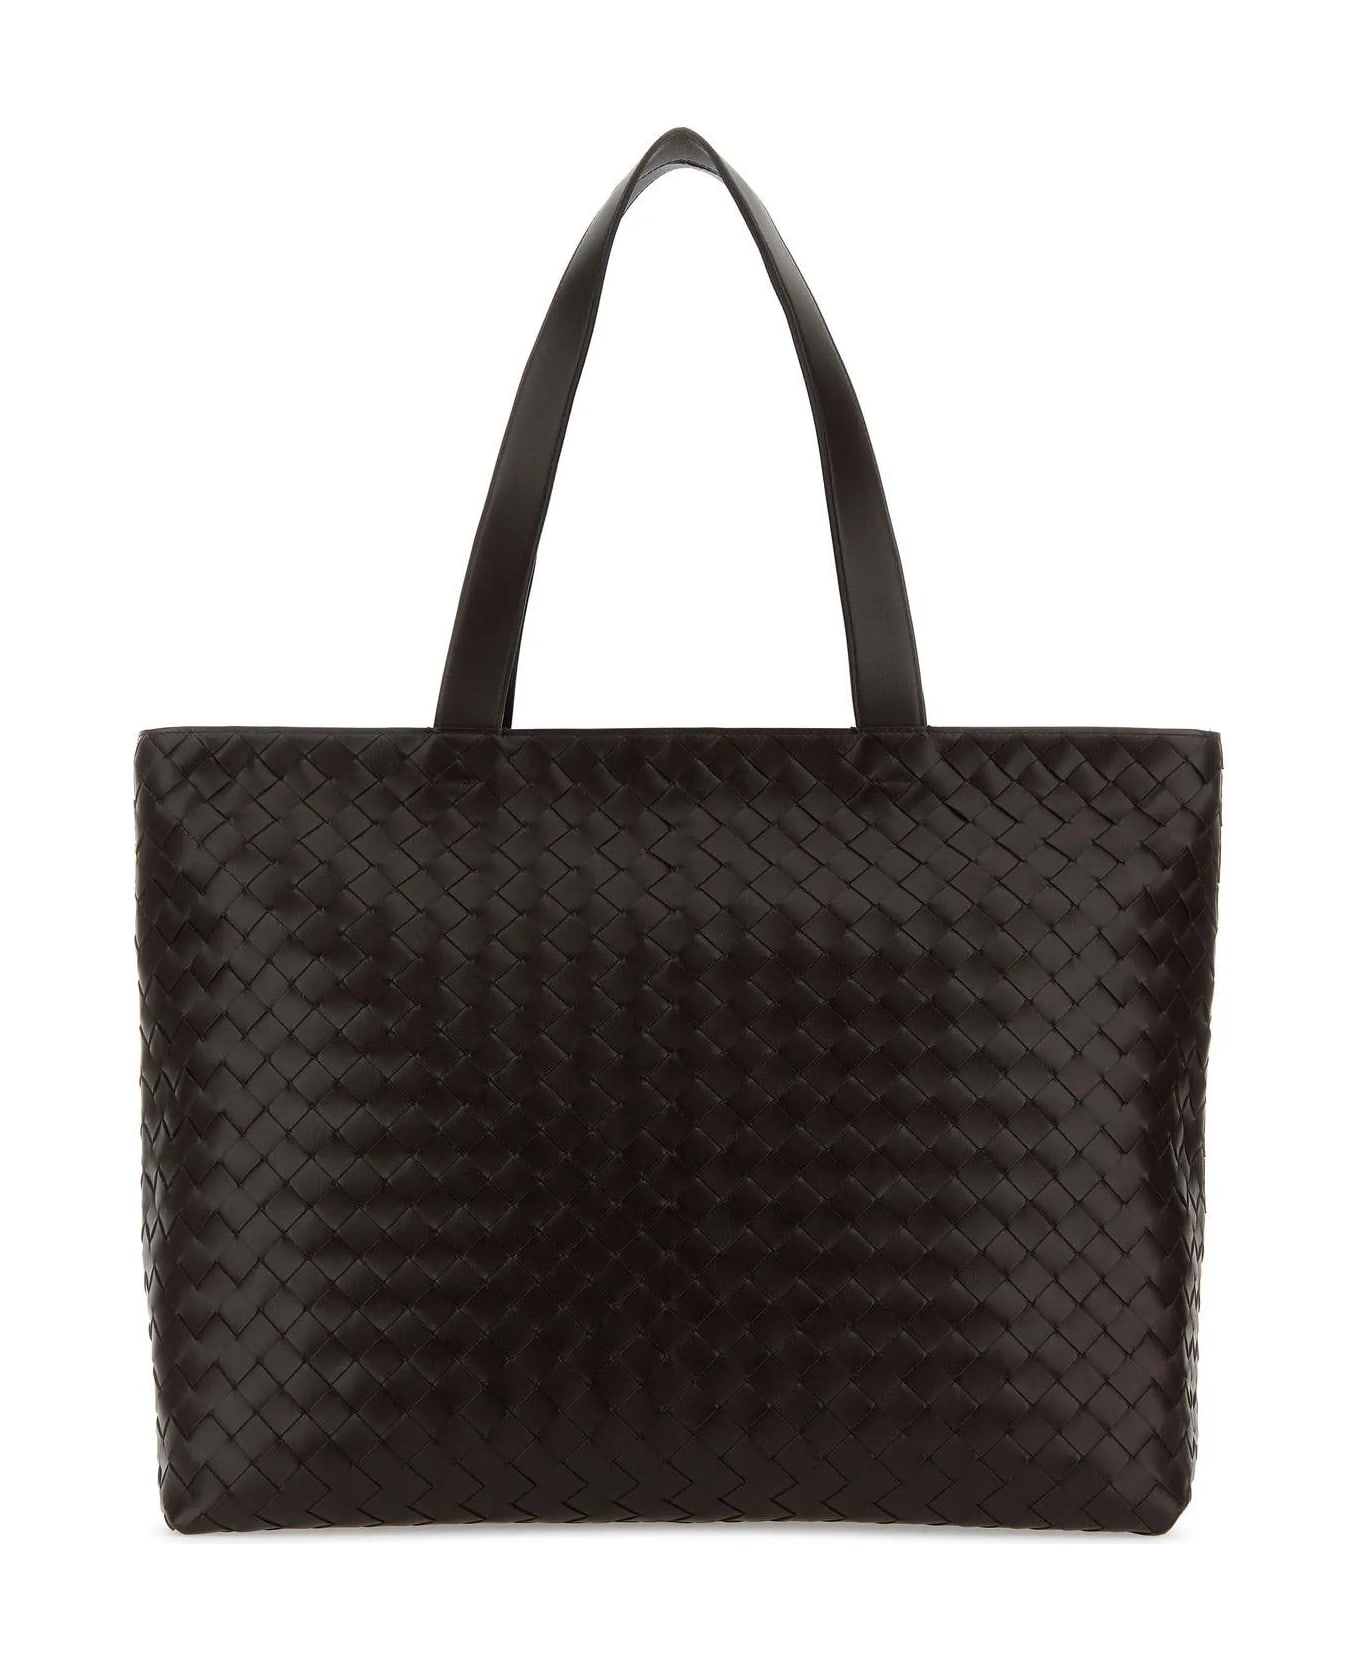 Bottega Veneta Dark Brown Leather Intrecciato Shopping Bag - BROWN